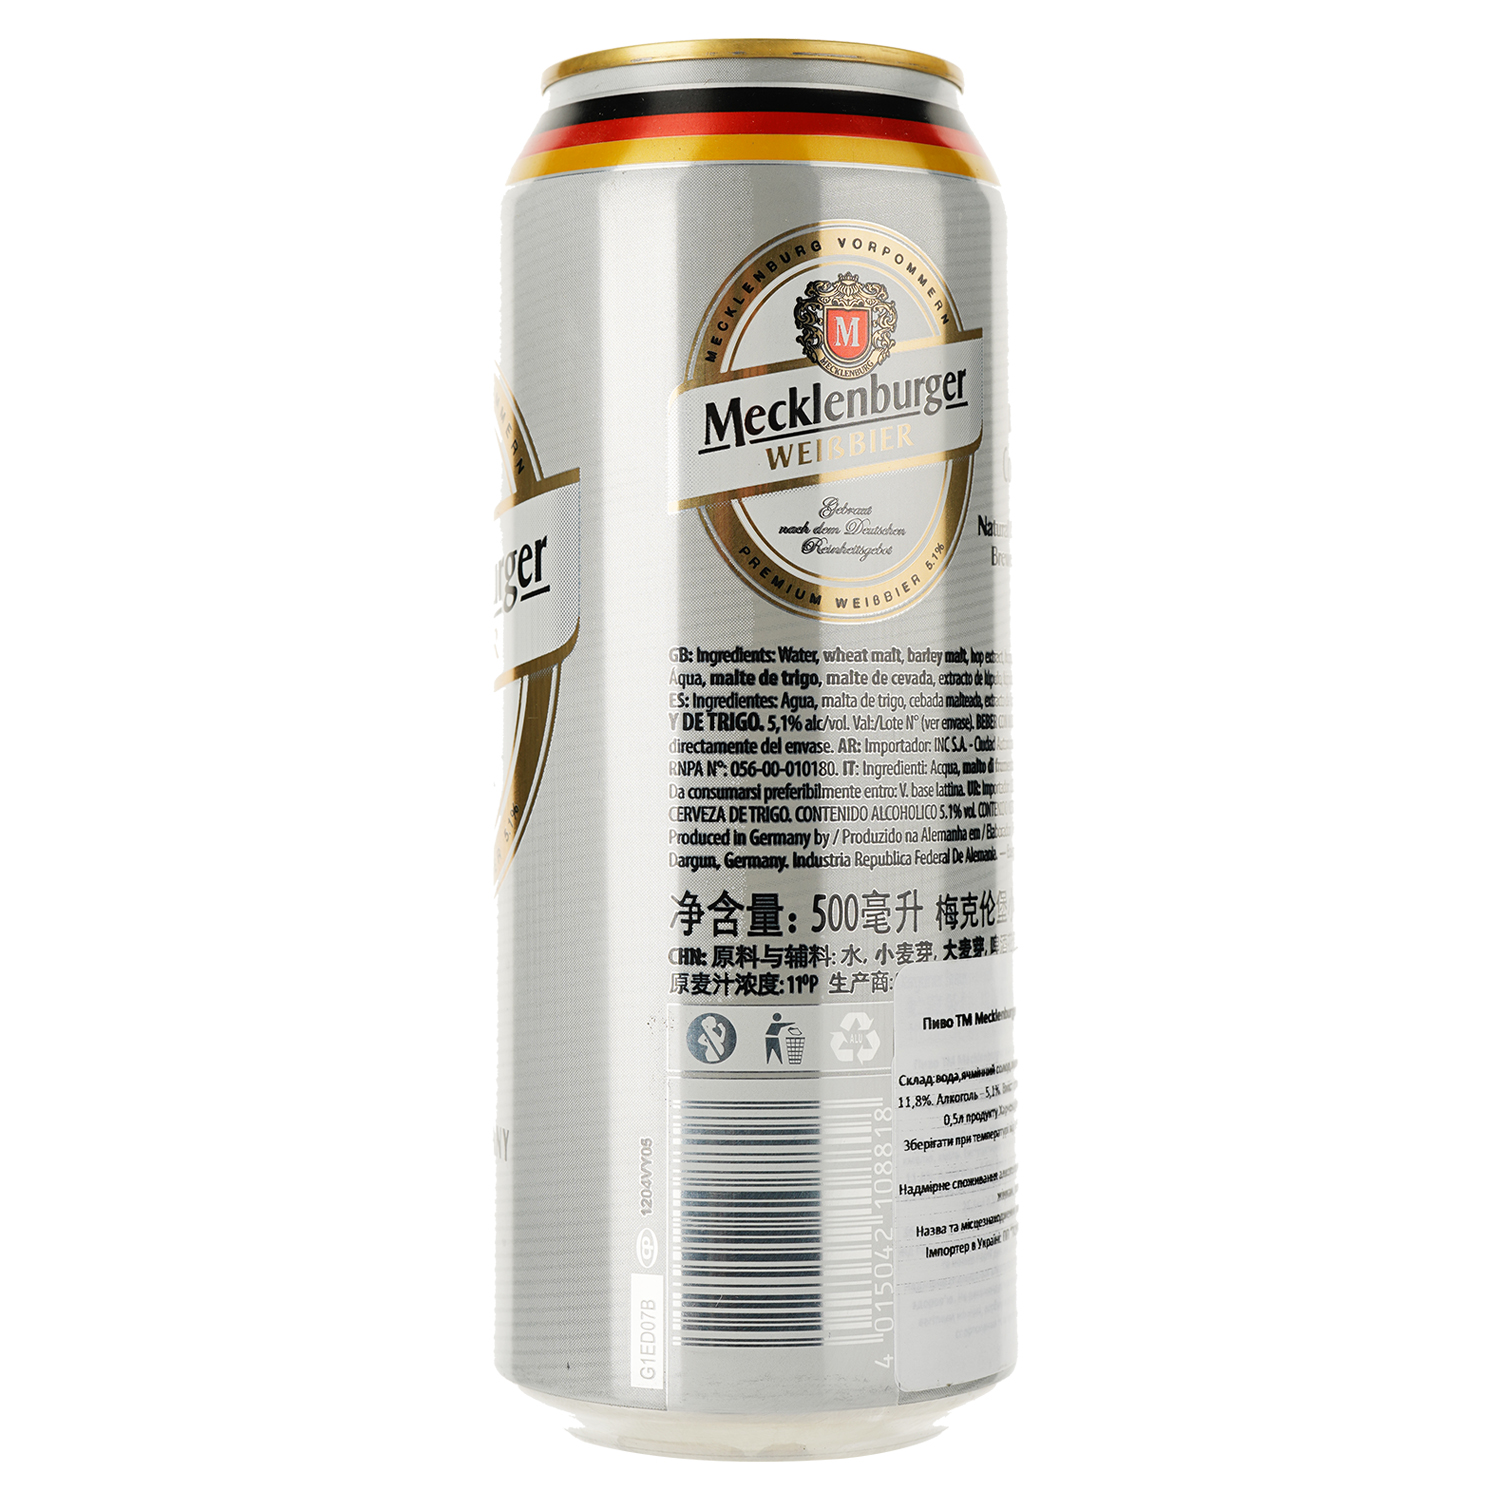 Пиво Mecklenburger Weissbier, светлое, 5.1%, ж/б, 0.5 л - фото 2